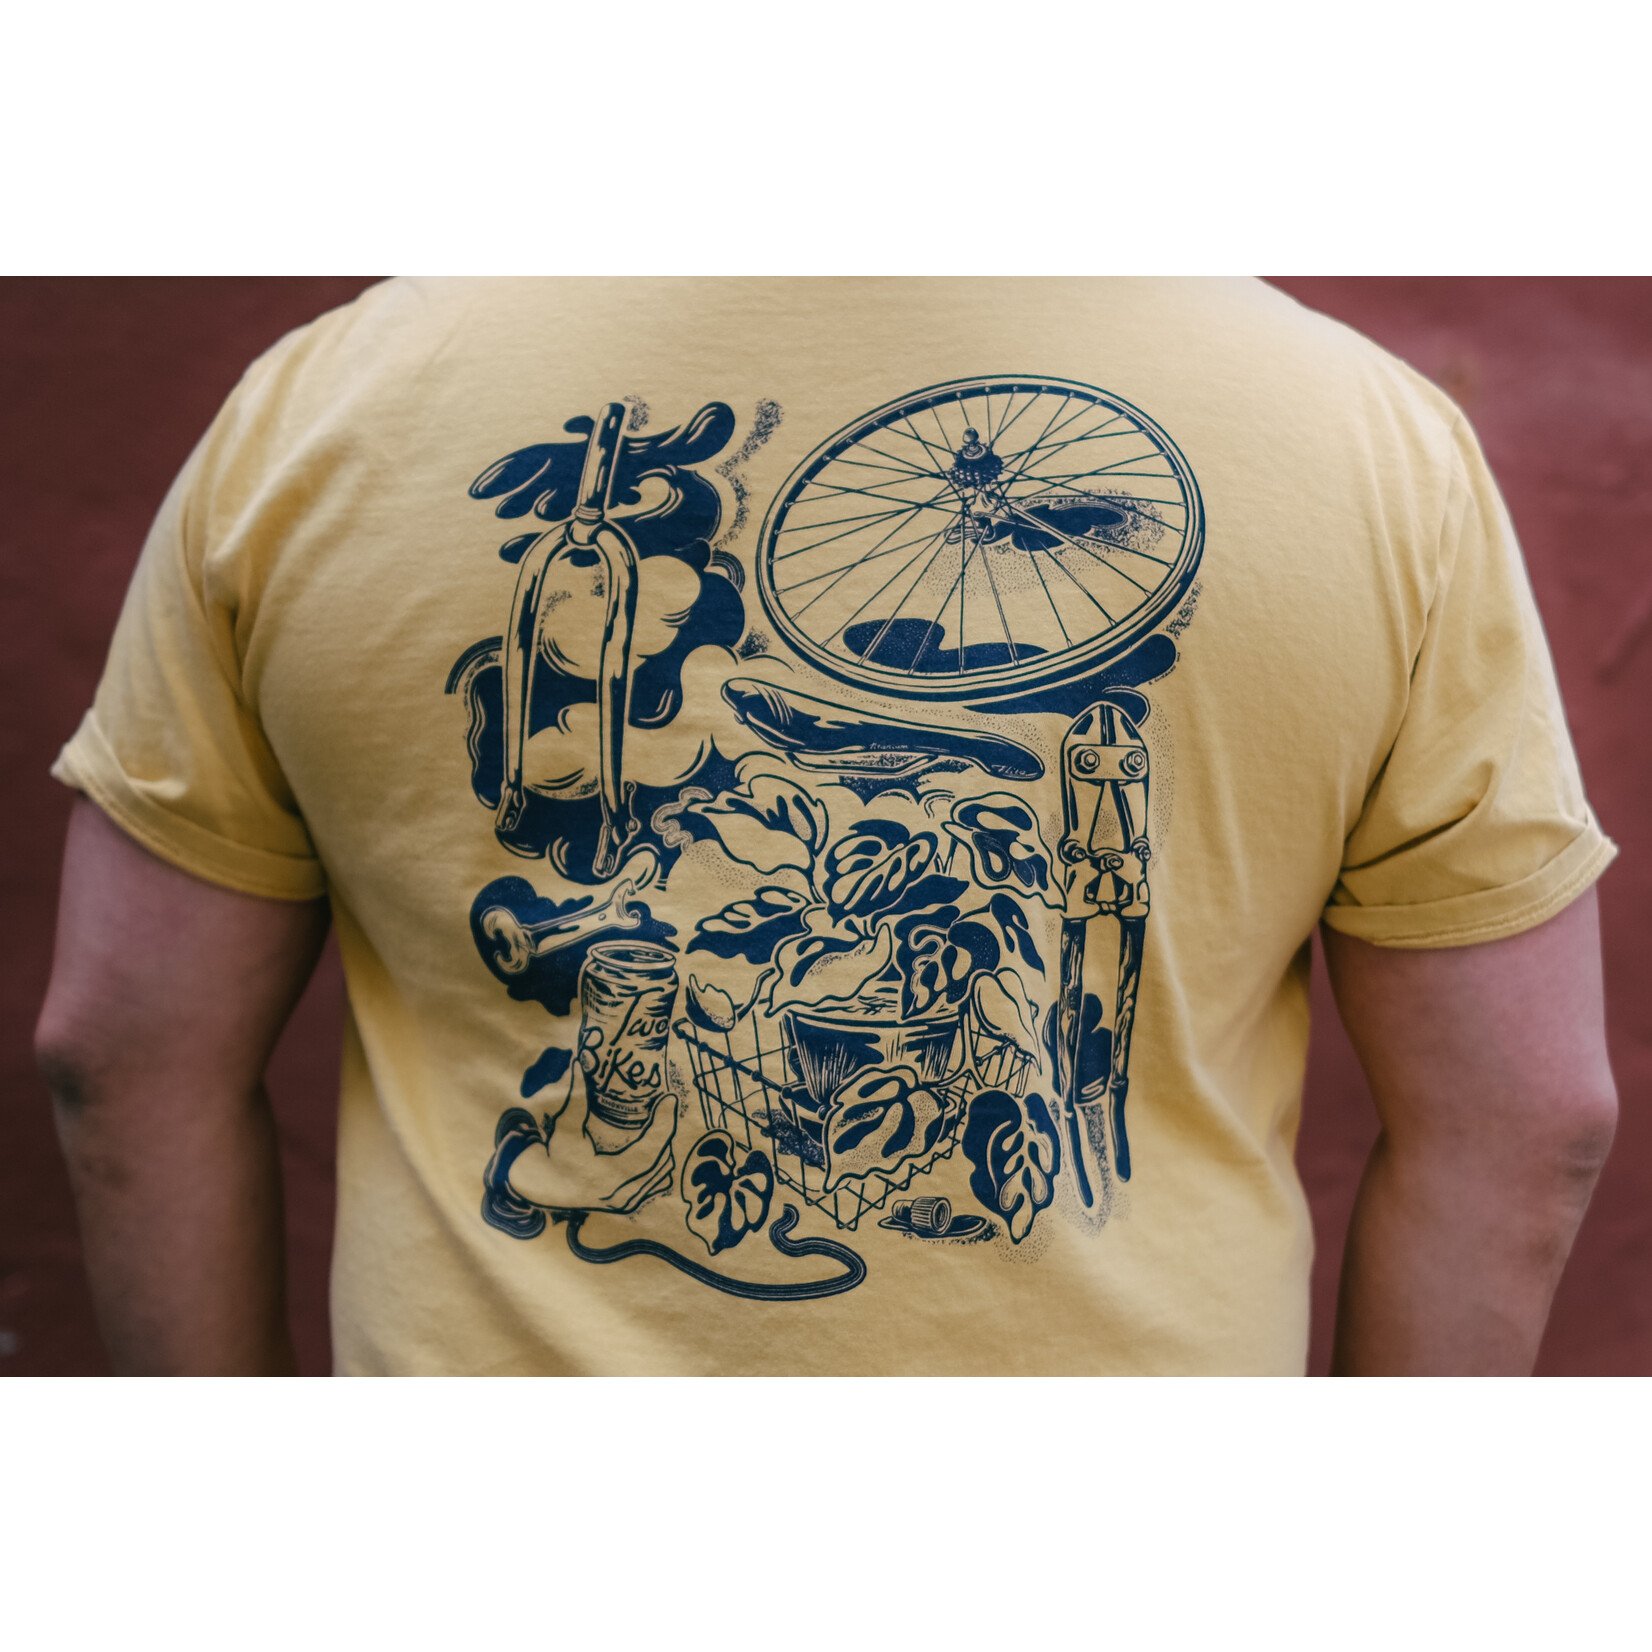 Two Bikes Sarah Shebaro Pocket T-Shirt